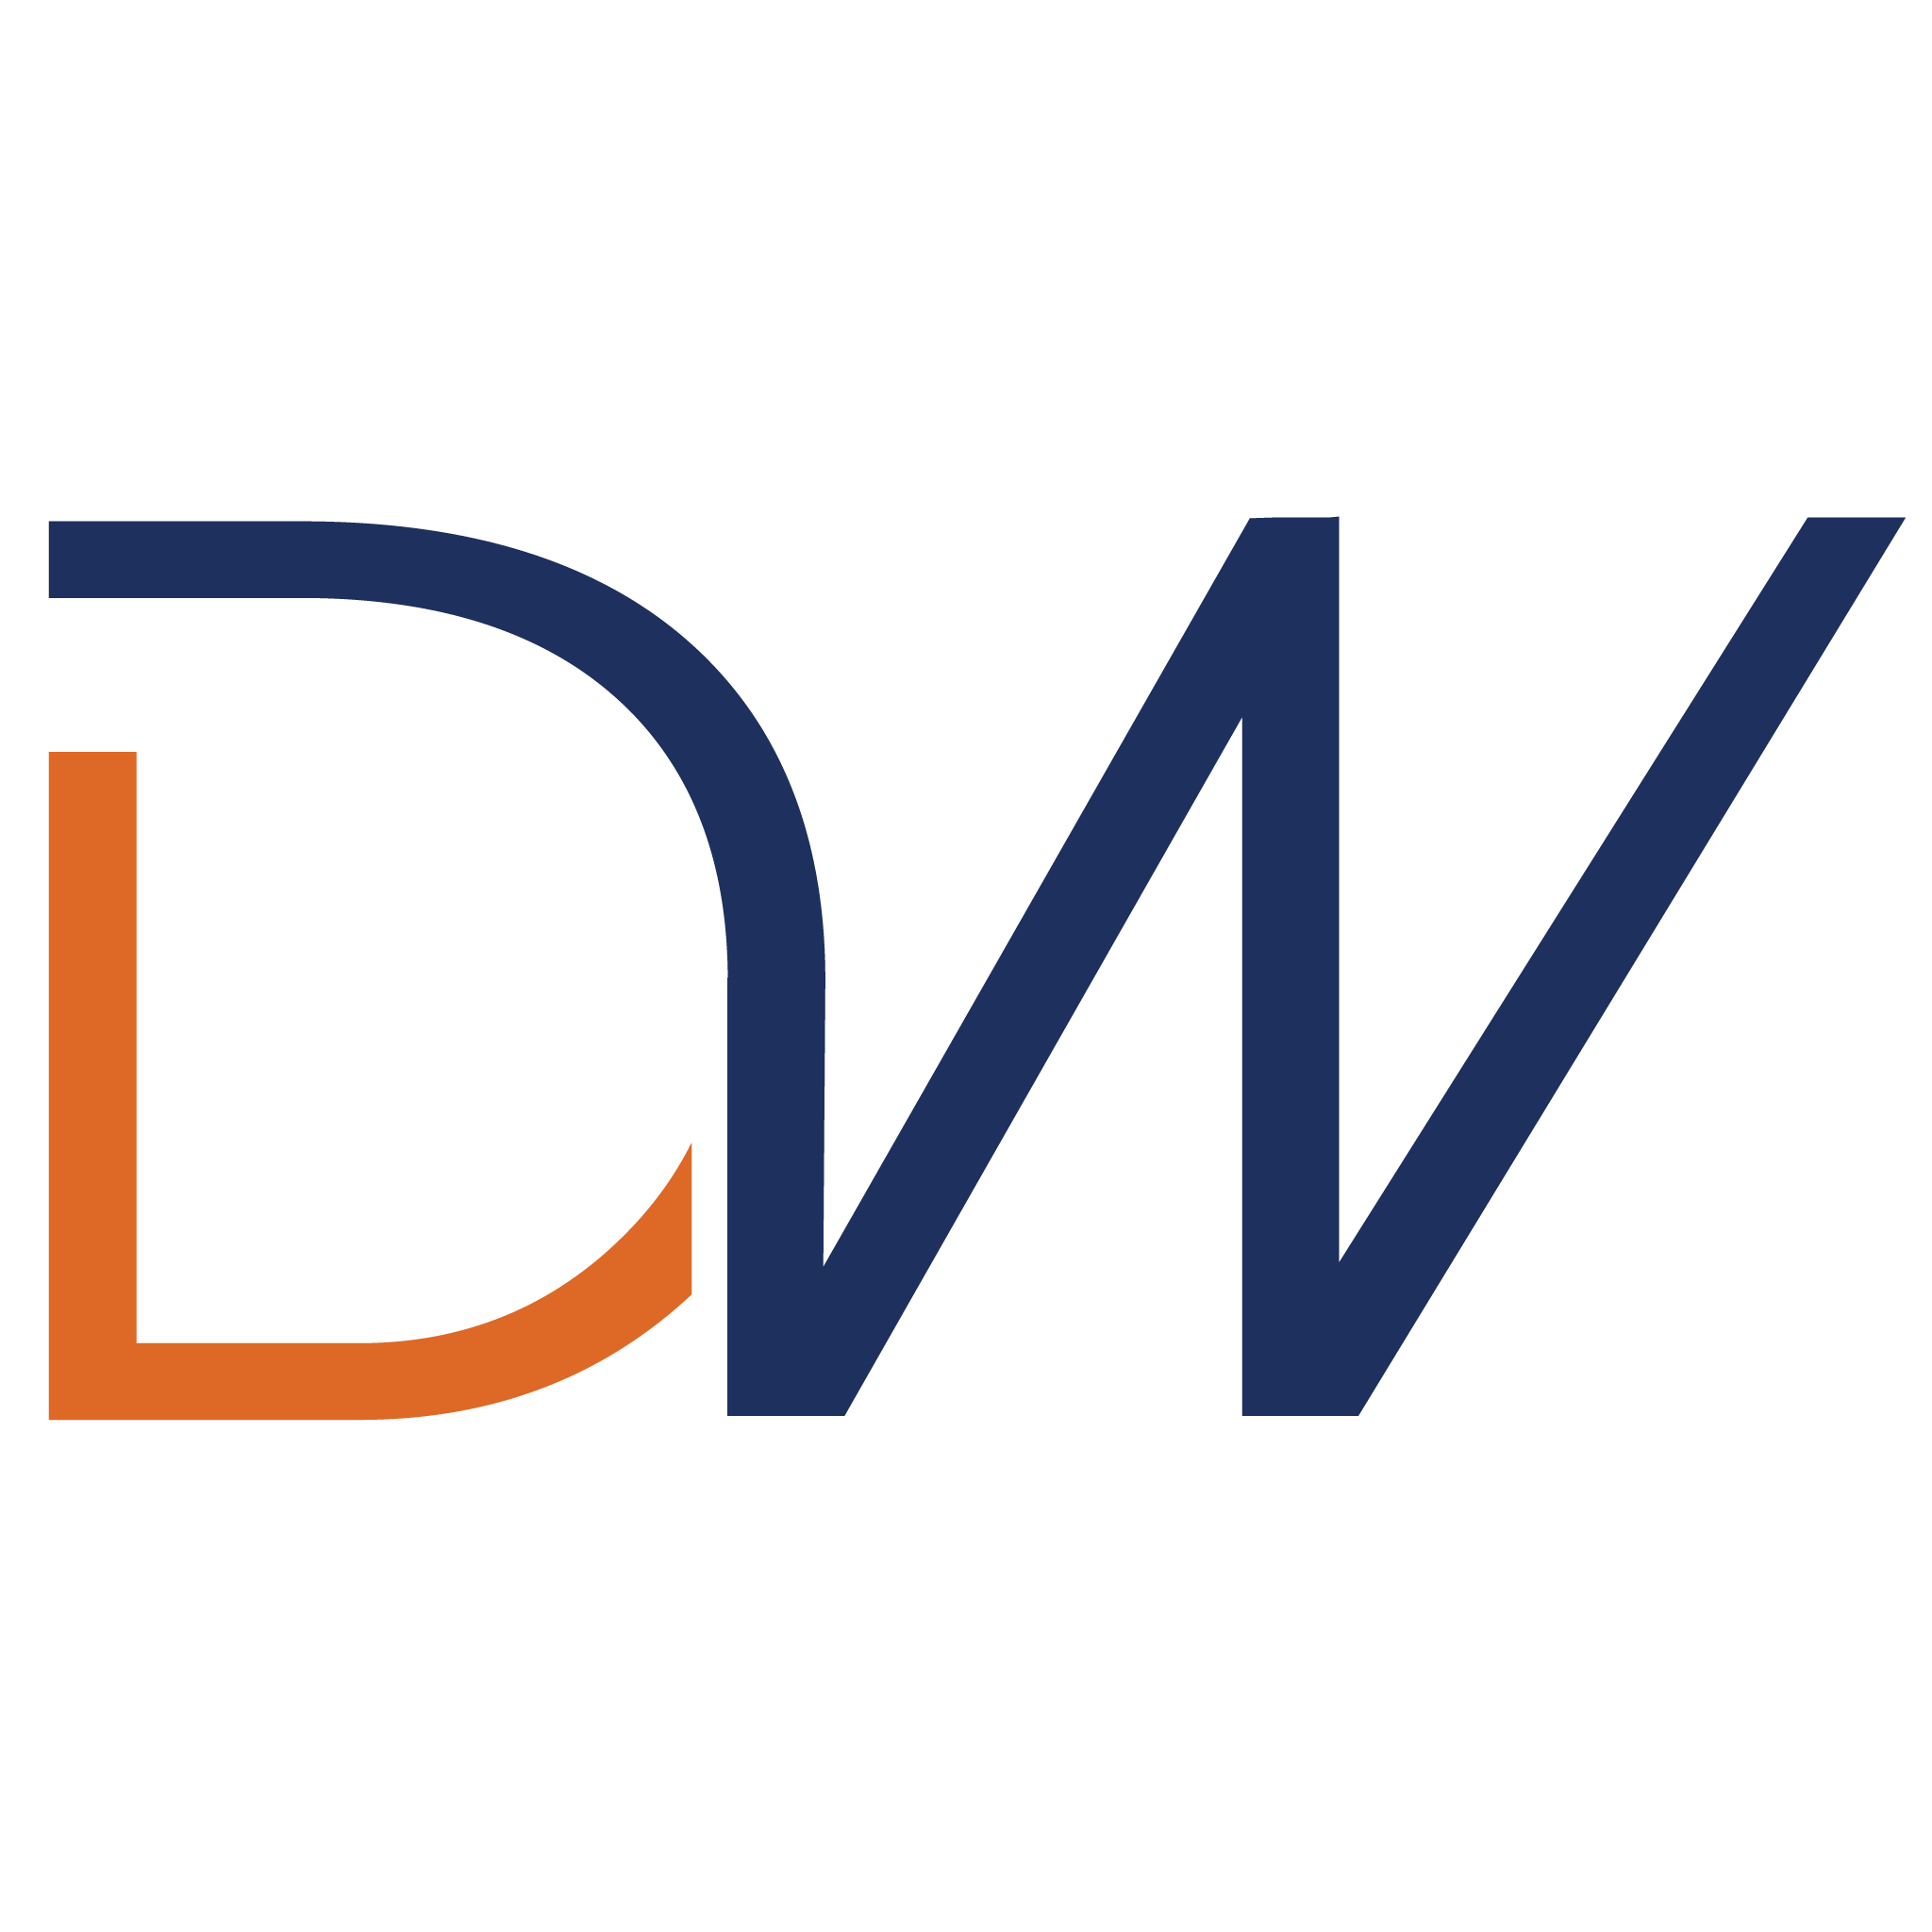 DW логотип. DW Телеканал. Deutsche Welle логотип. Буква DW В ЛОГОТИПАХ.